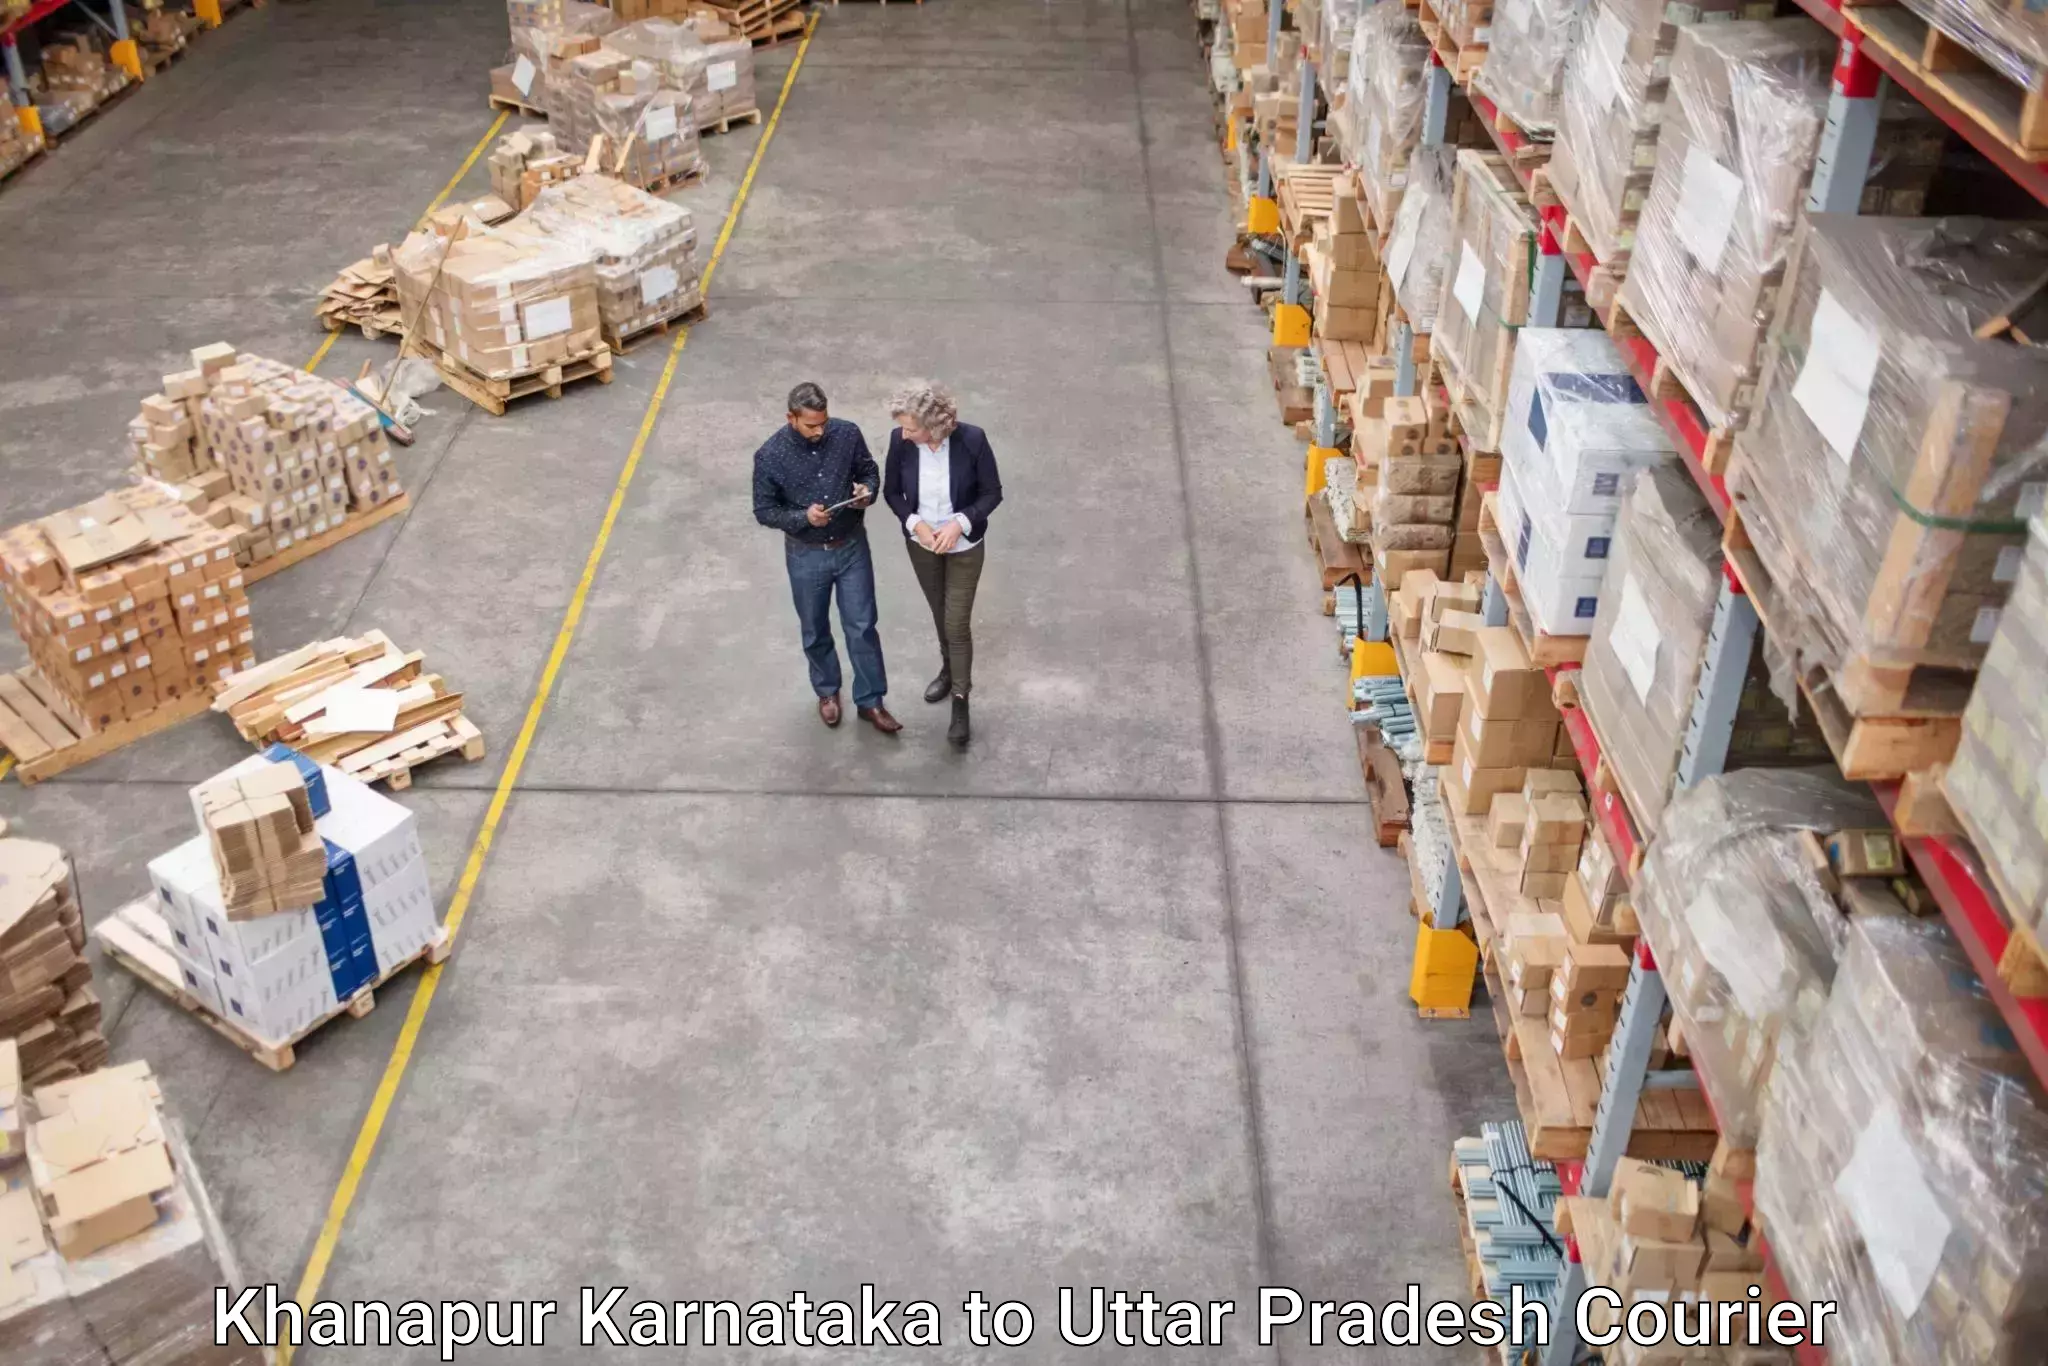 Nationwide courier service Khanapur Karnataka to Mainpuri